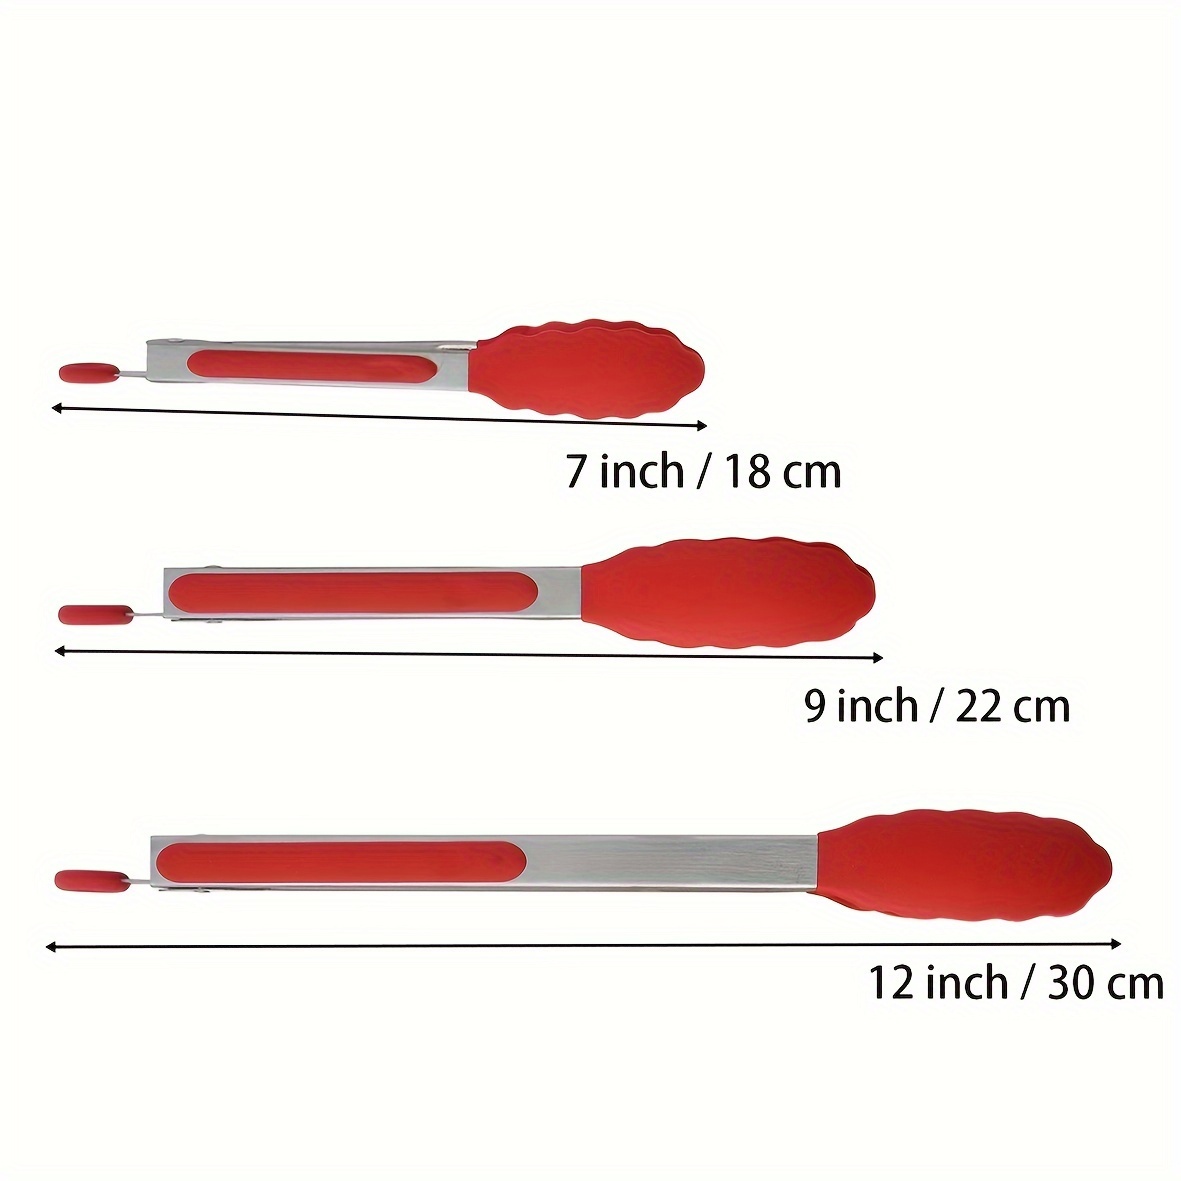 Mini Tongs Silicone 7/18cm Red